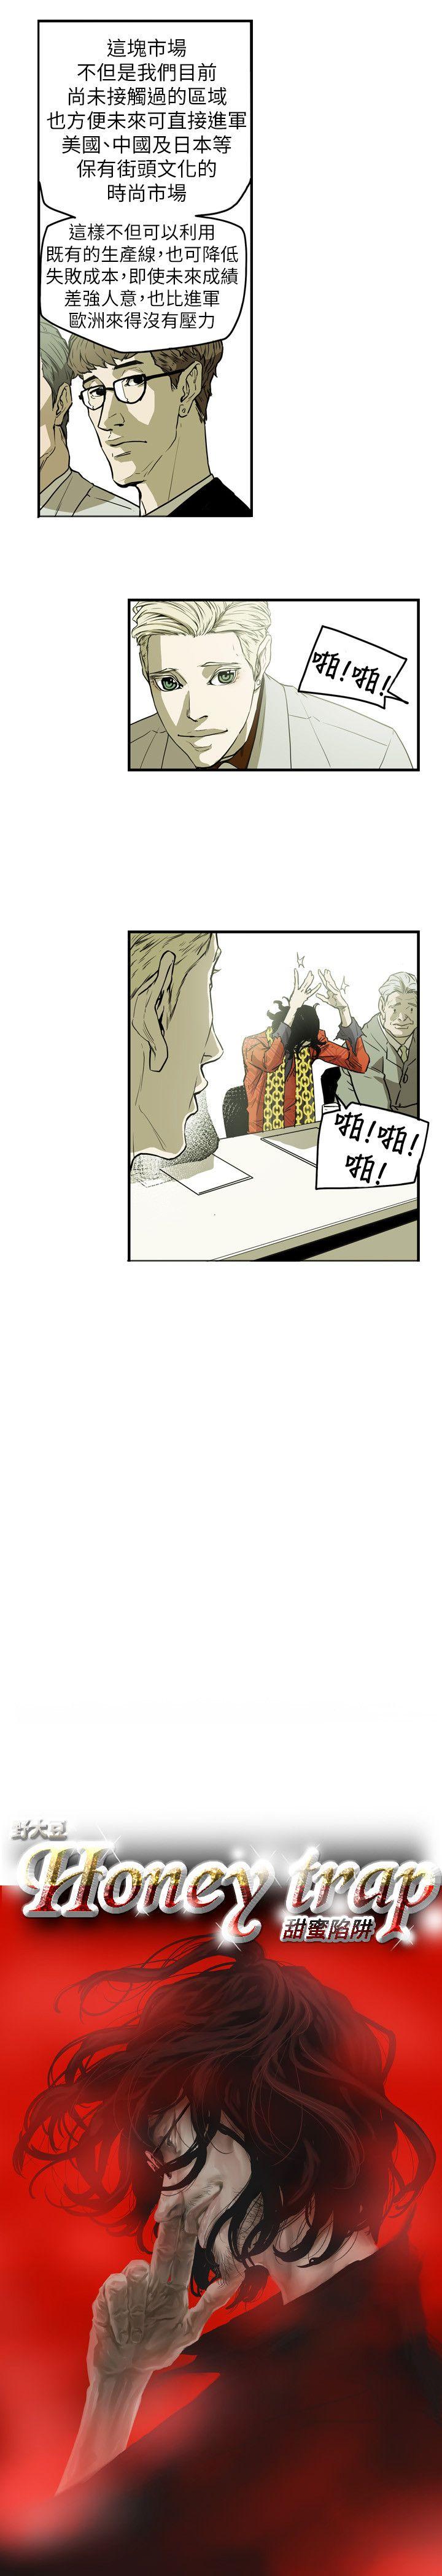 Honey trap 甜蜜陷阱  第45话 漫画图片6.jpg